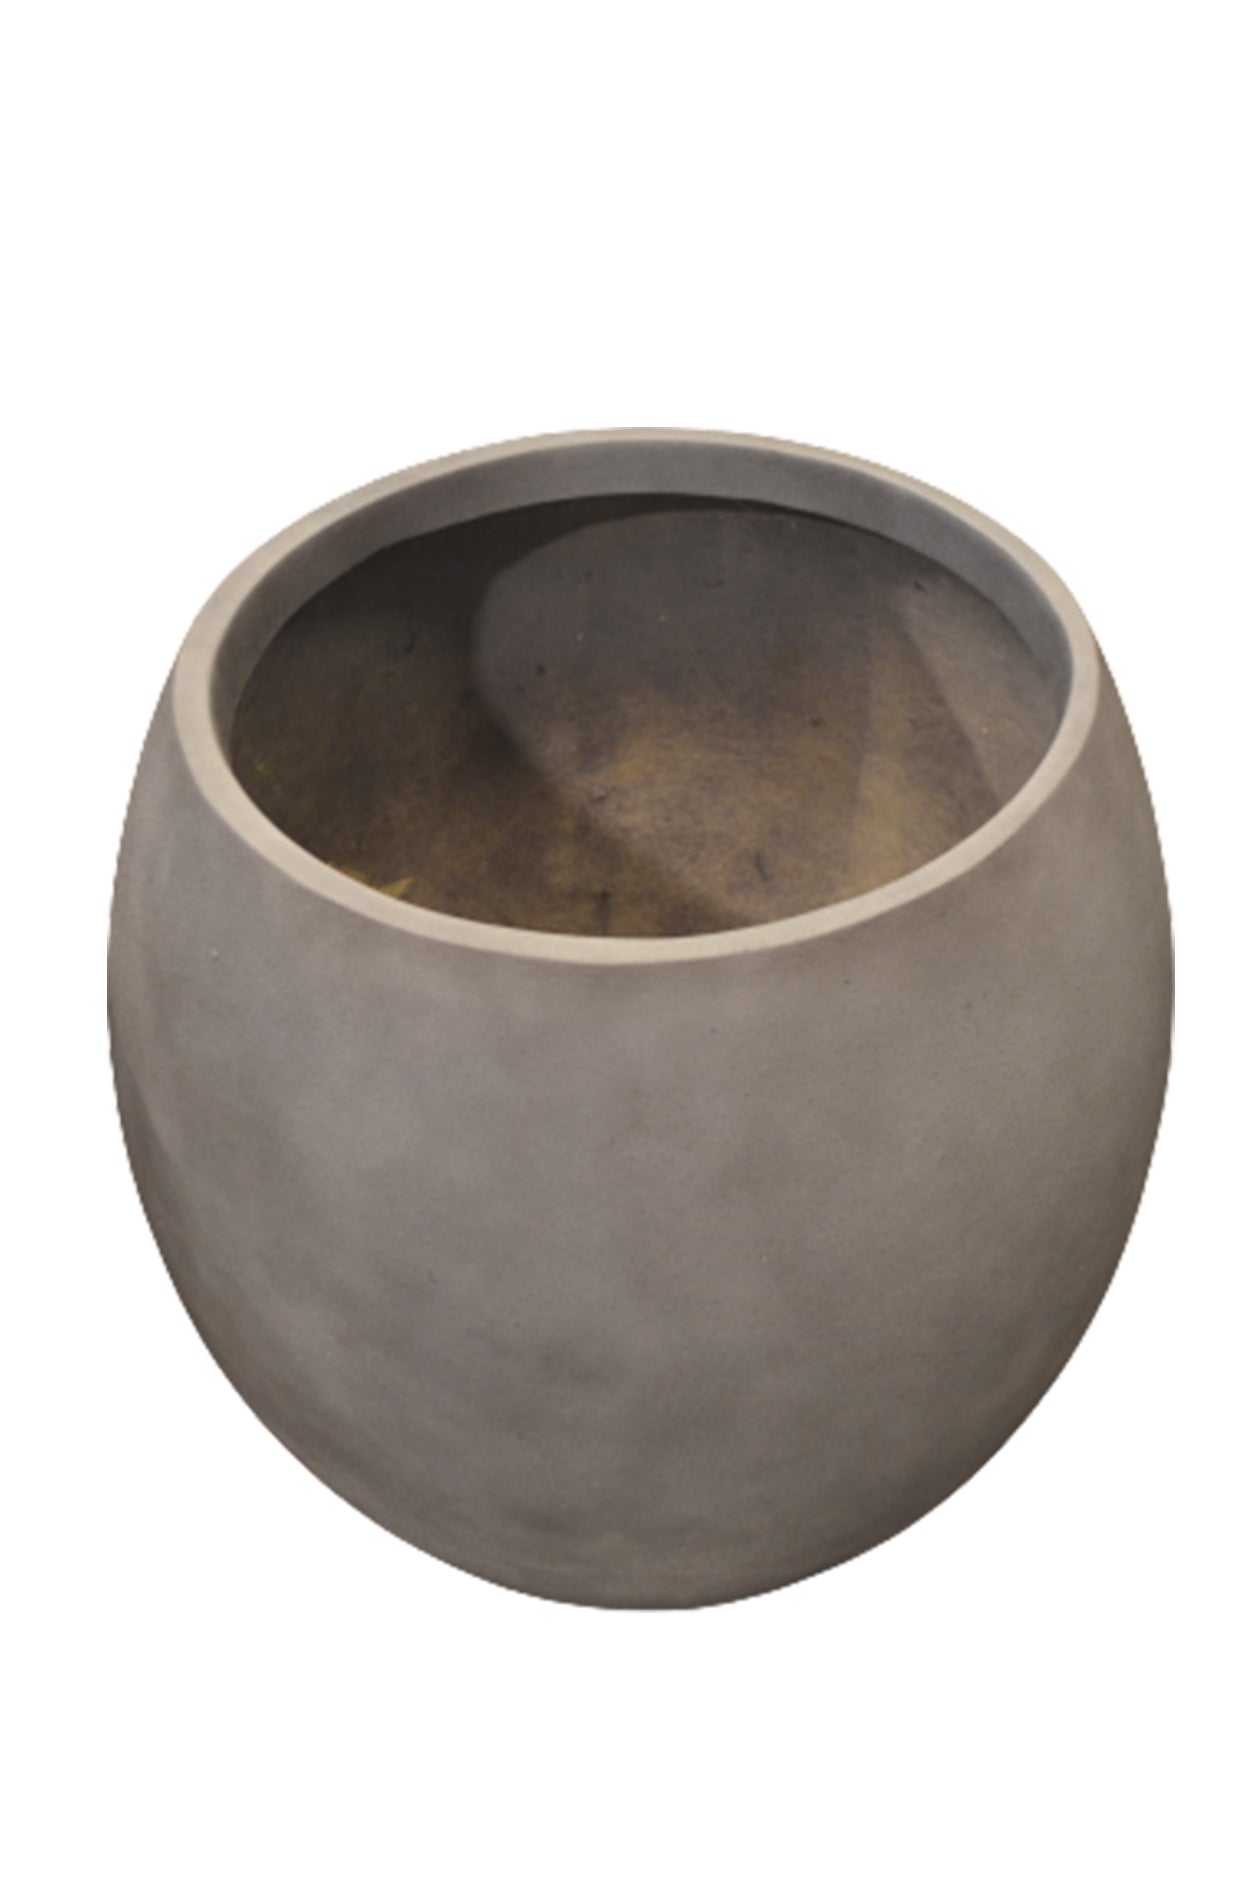 Fiber Stone Pot - Plant Studio LLC